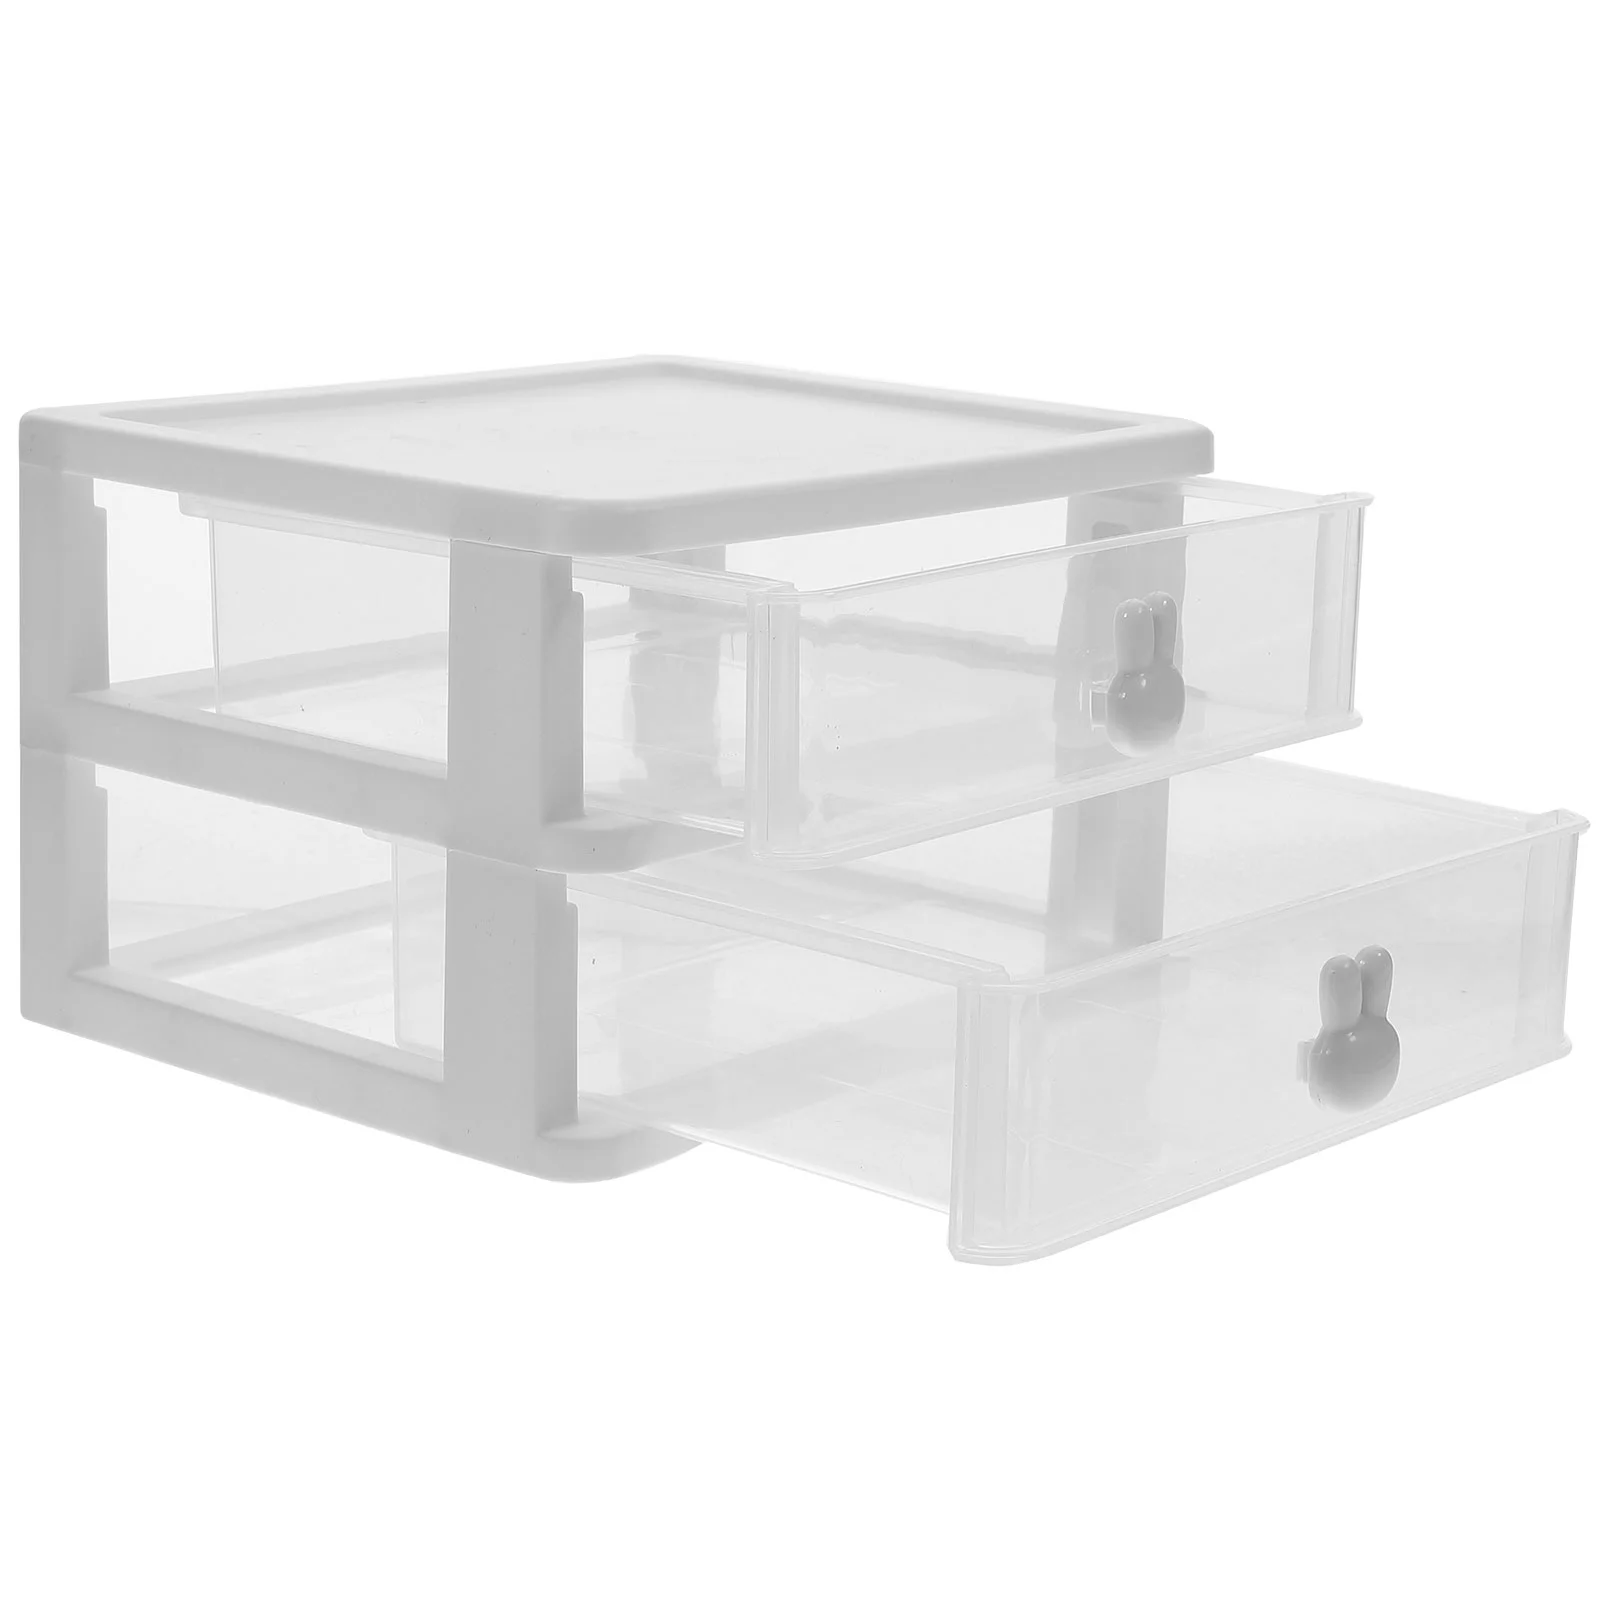 

Desktop Storage Box Container Makeup Organizer Holder Bathroom Drawer Tabletop Practical Drawers Plastic Shelves